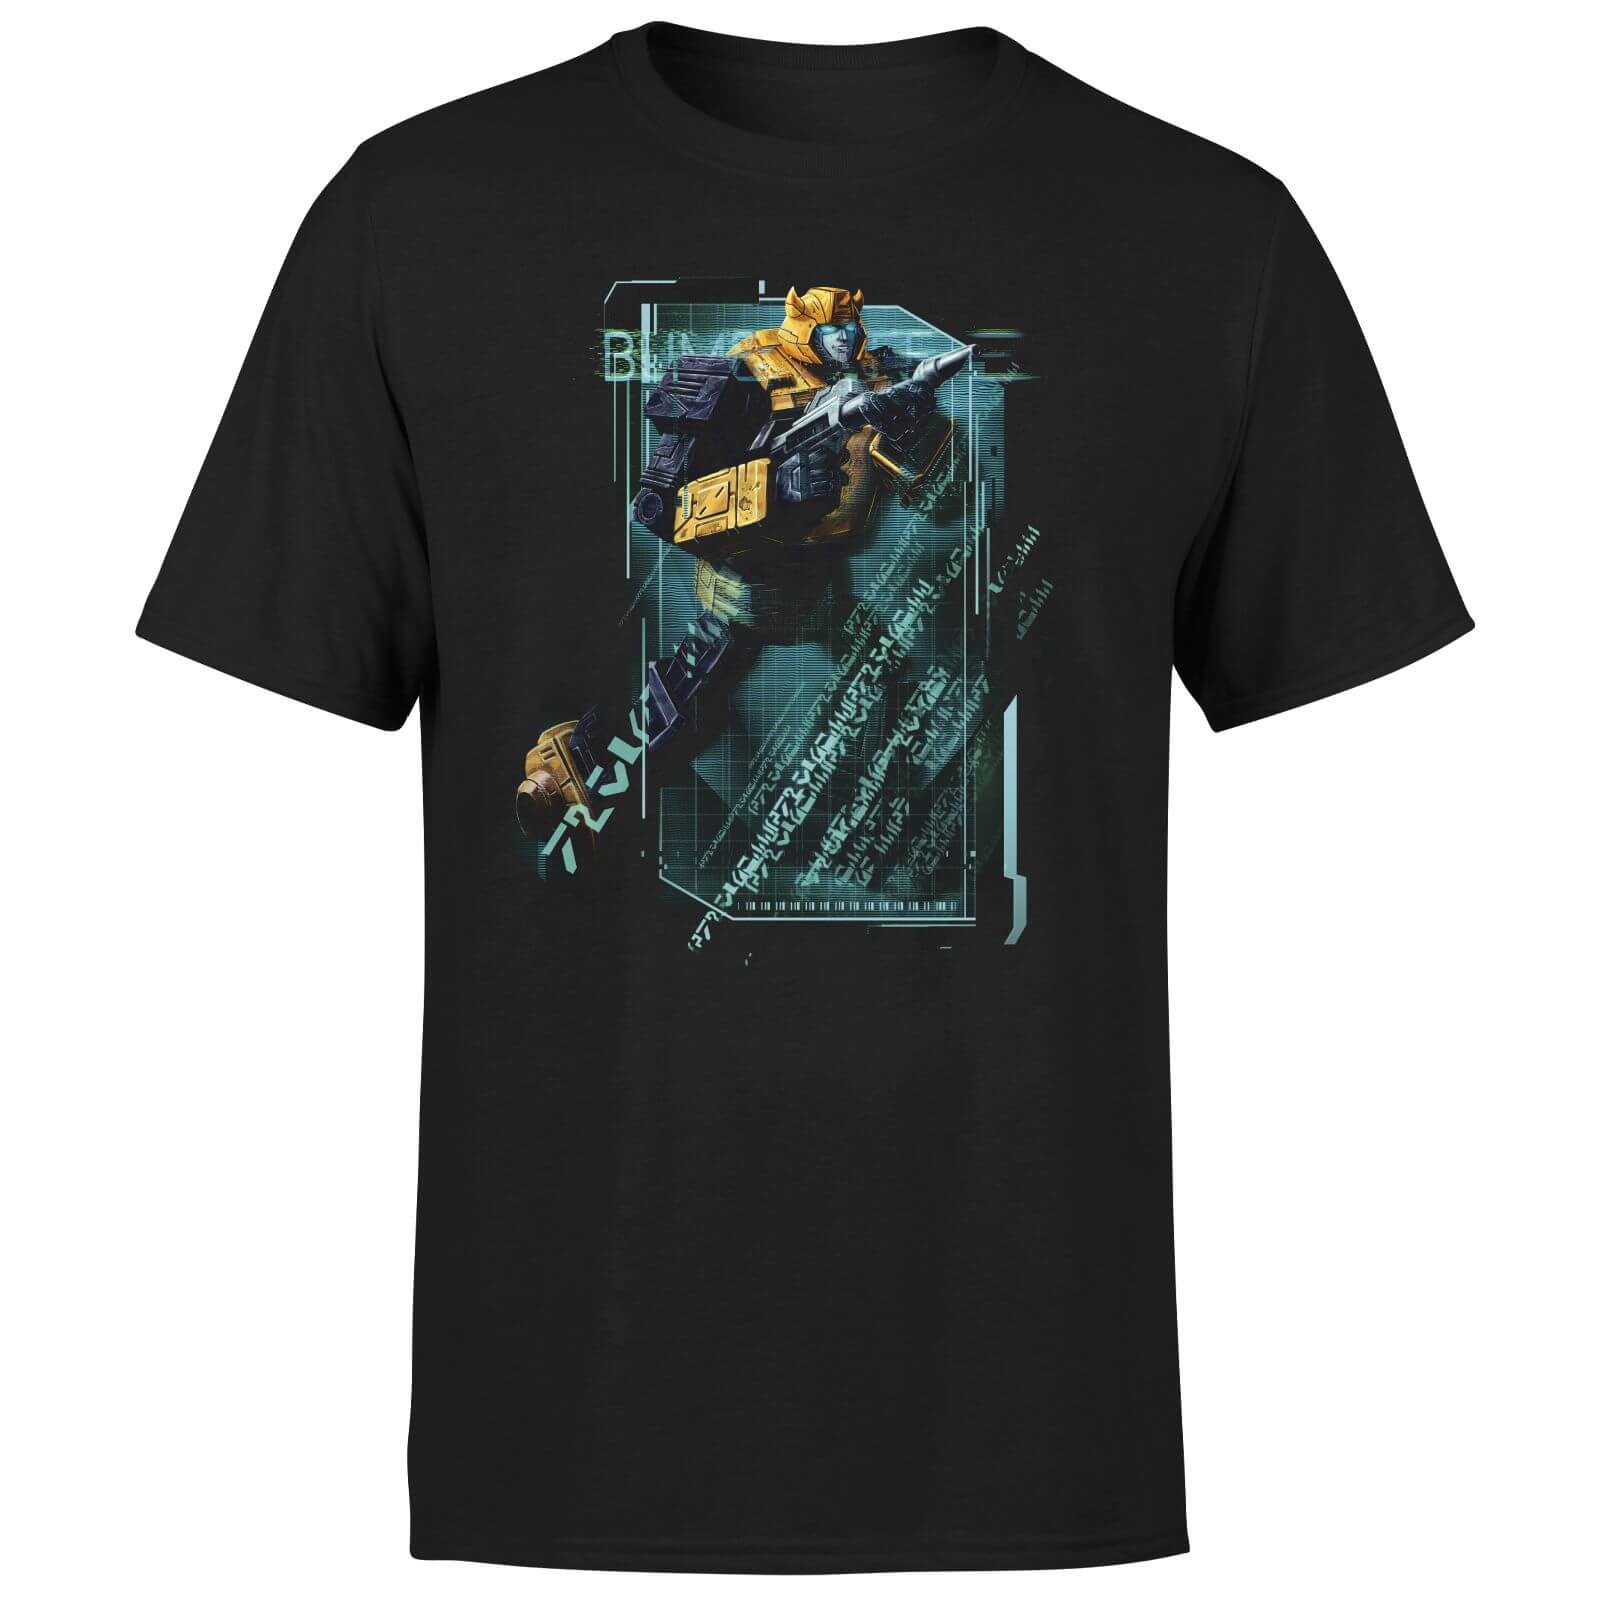 Transformers Bumble Bee Tech Unisex T-Shirt - Black - S - Black